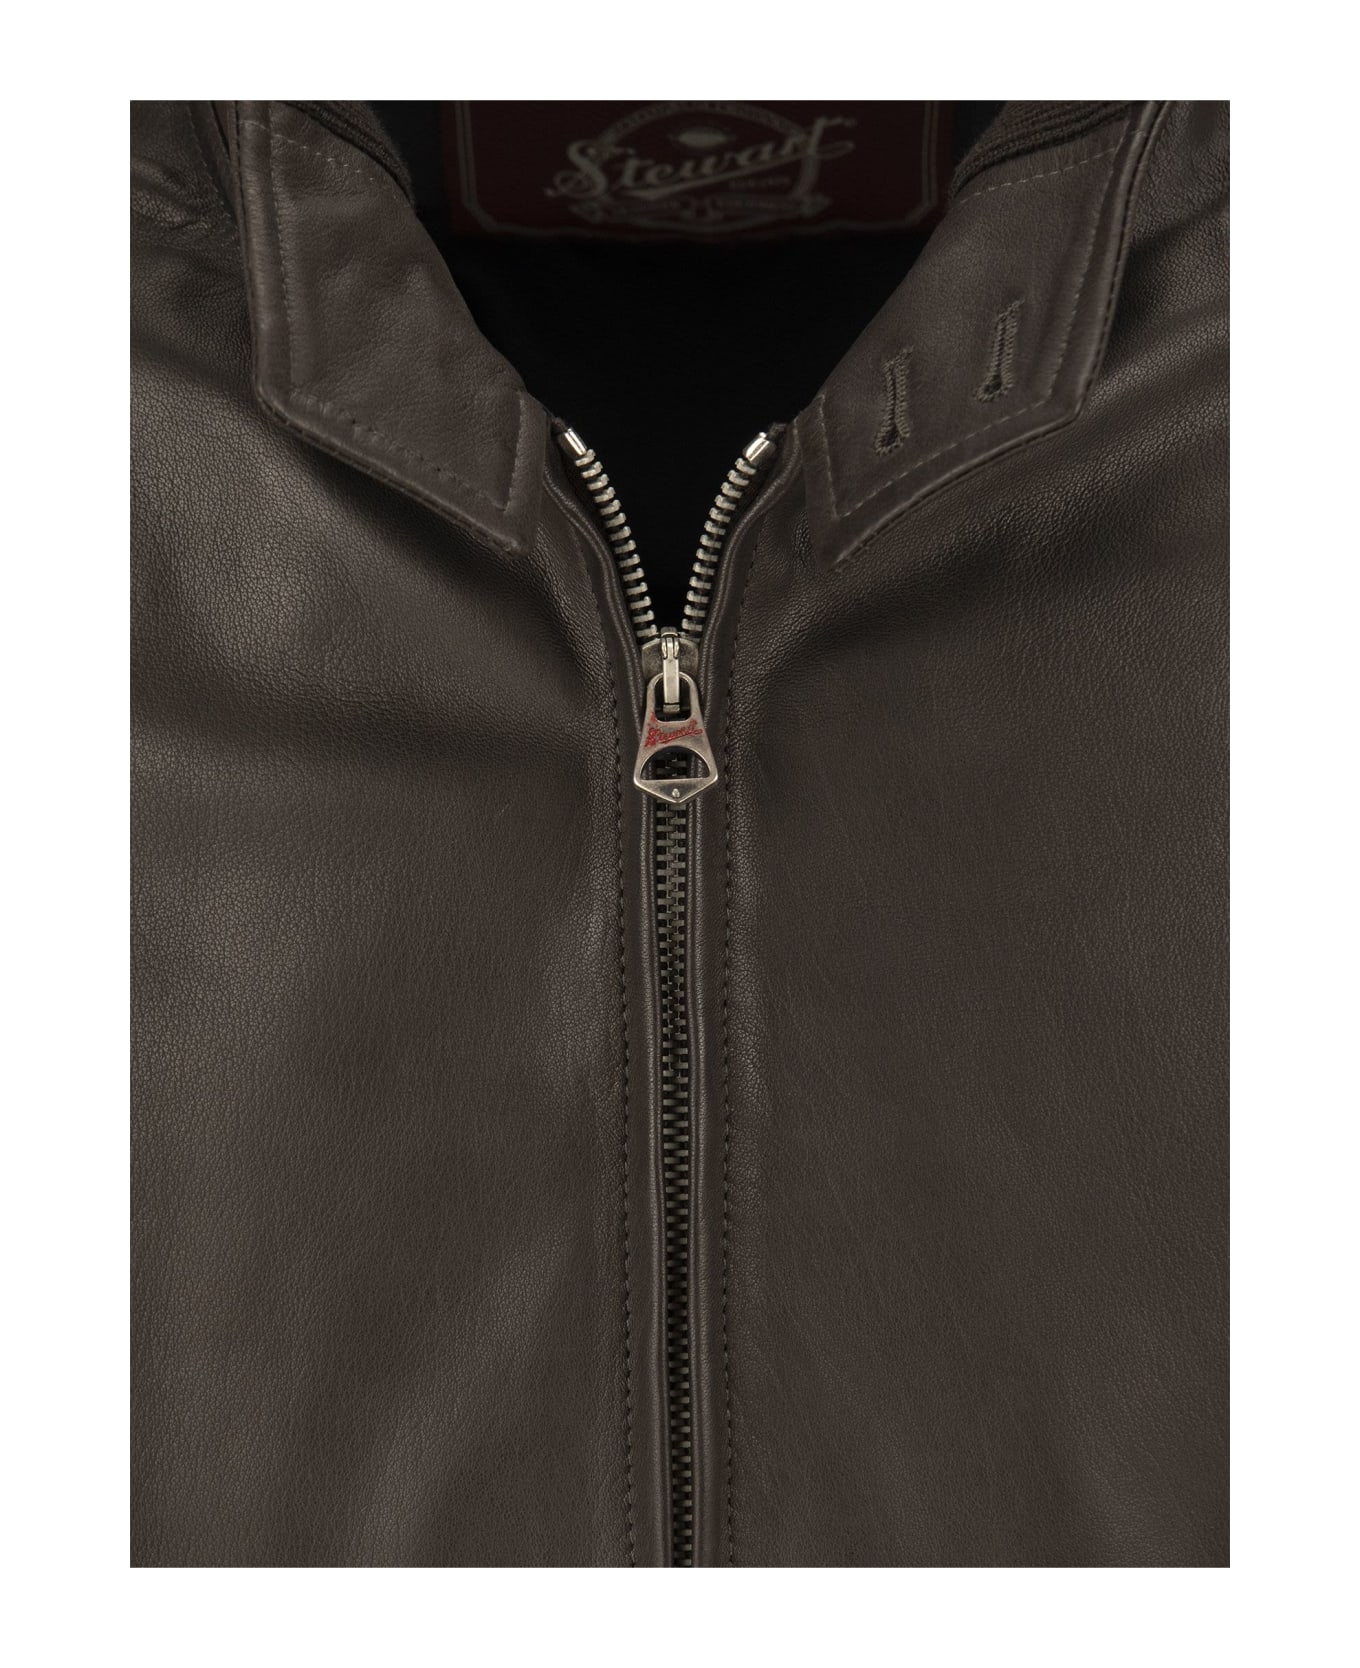 Stewart Tenerife Leather Jacket - Dark Brown レザージャケット